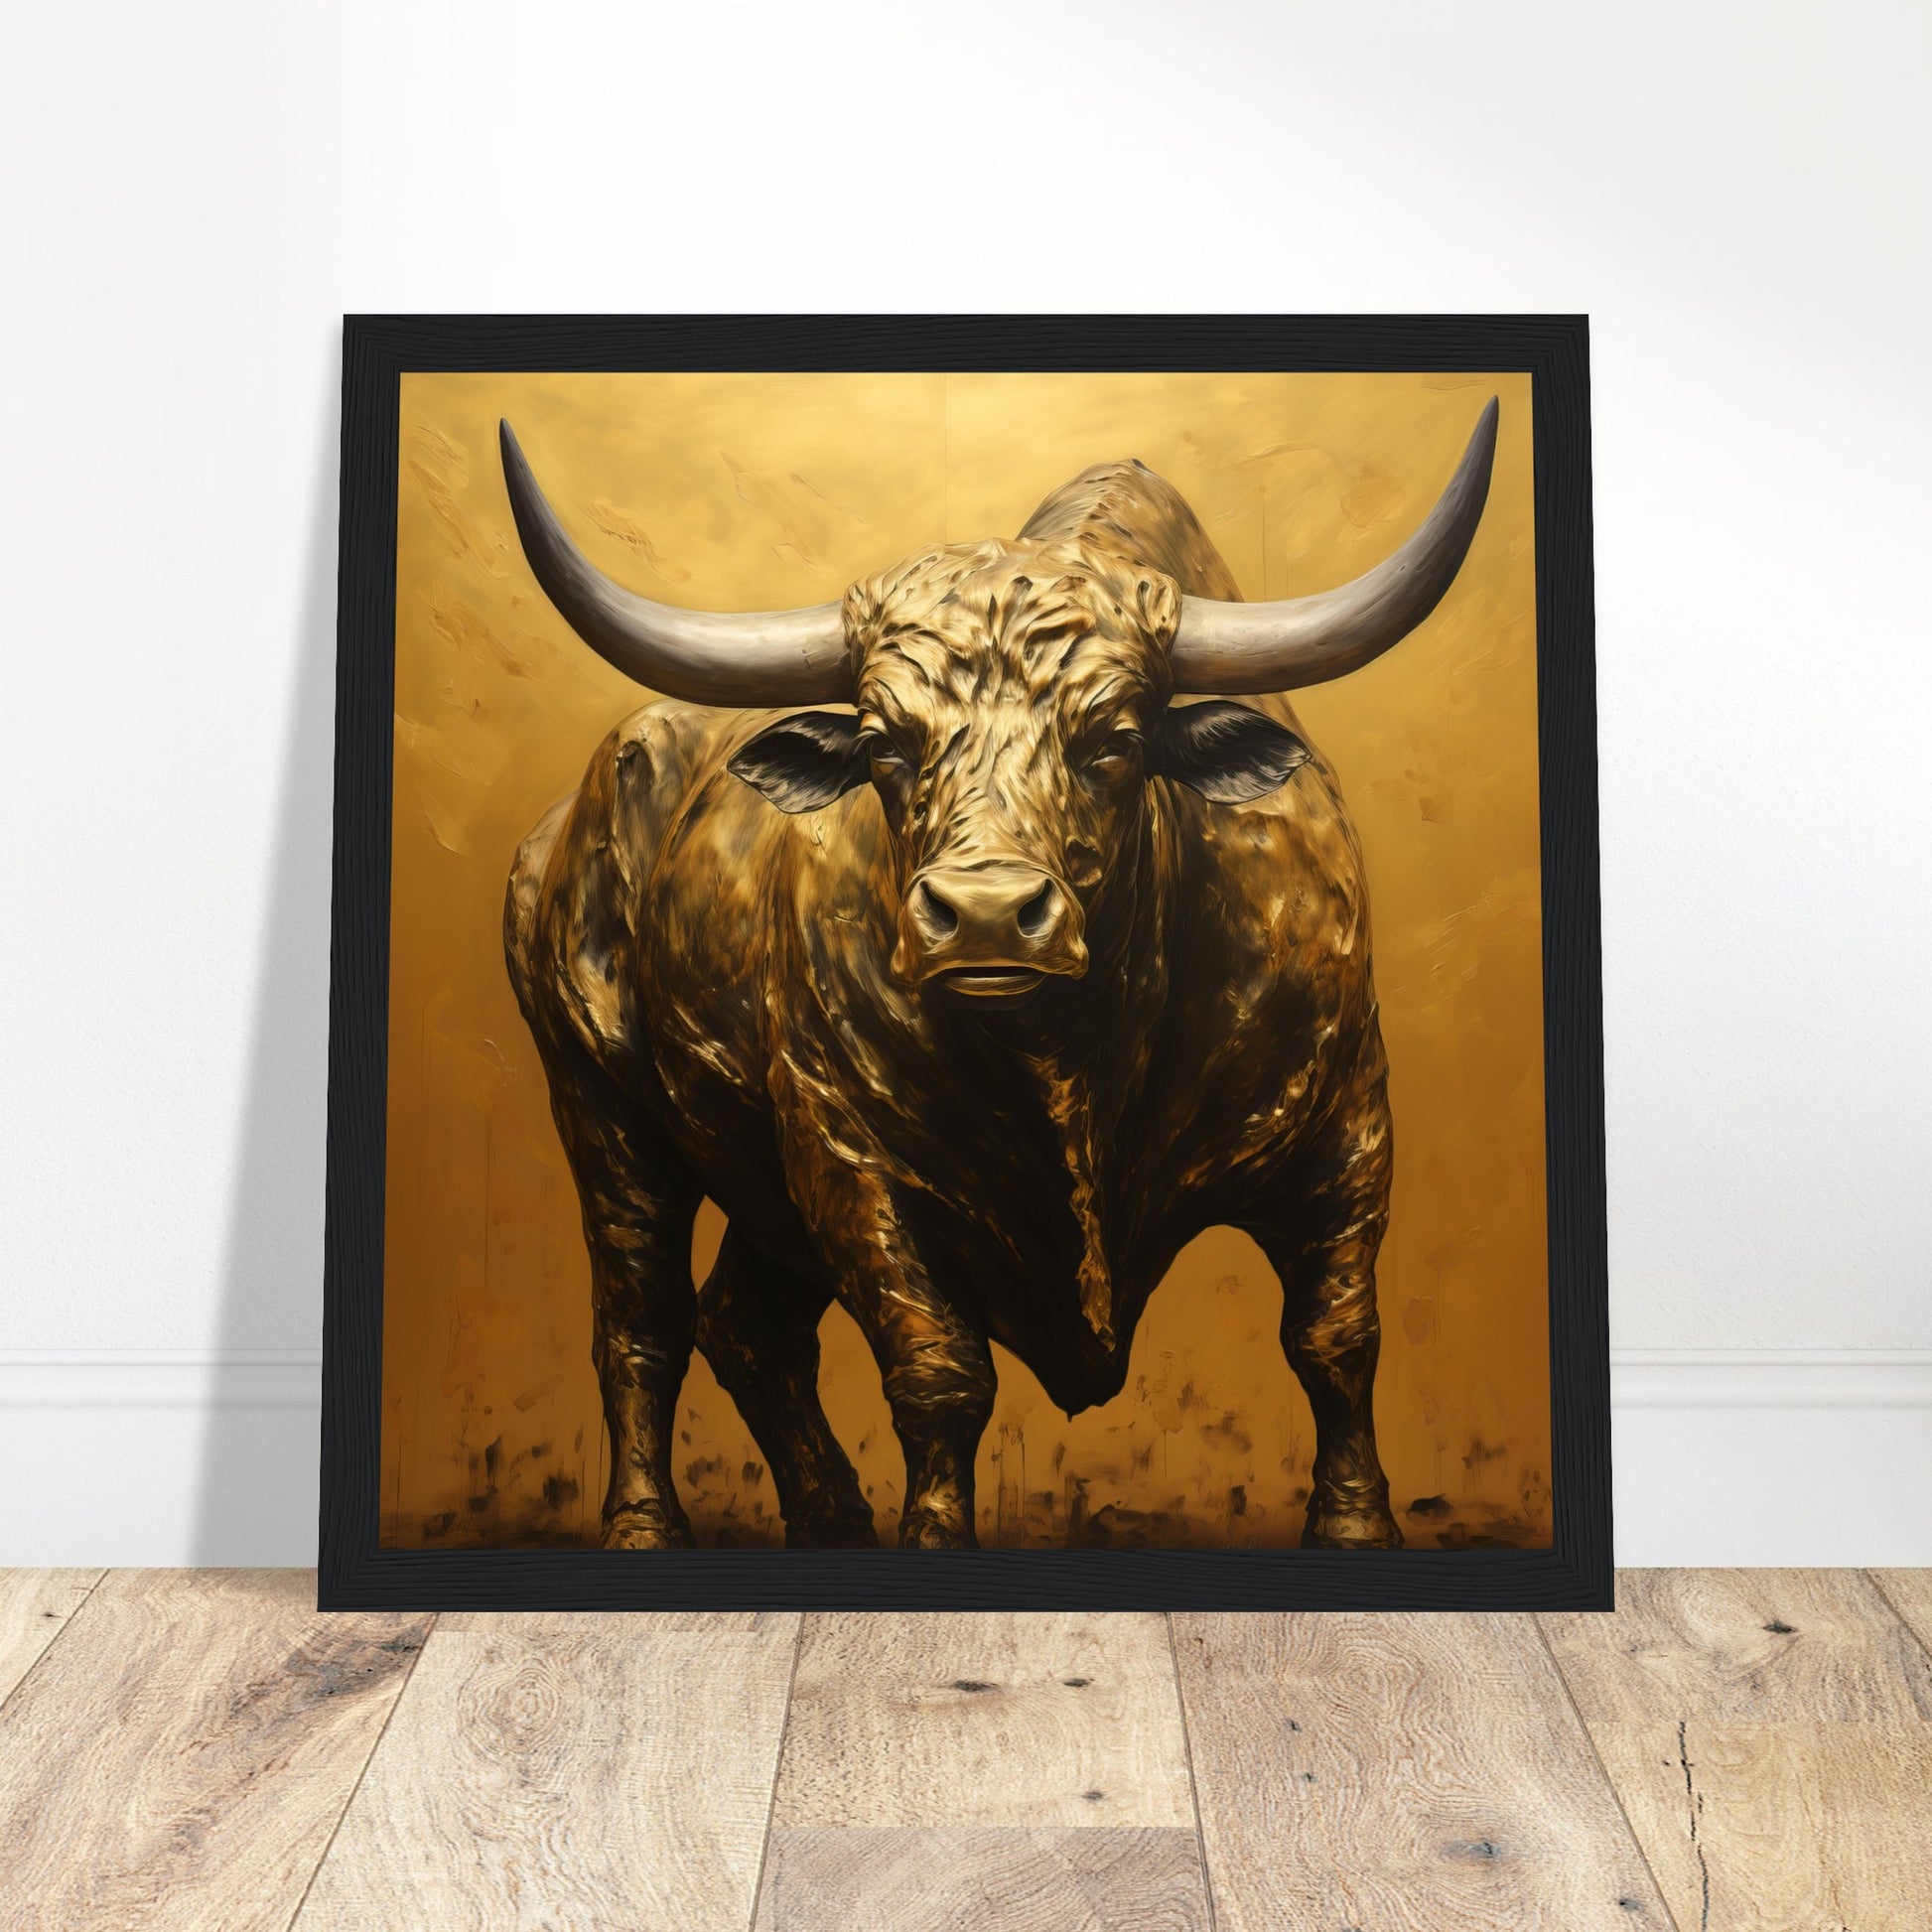 Gold Rush Exclusive Print - Print Room Ltd Black frame 30x30 cm / 12x12"